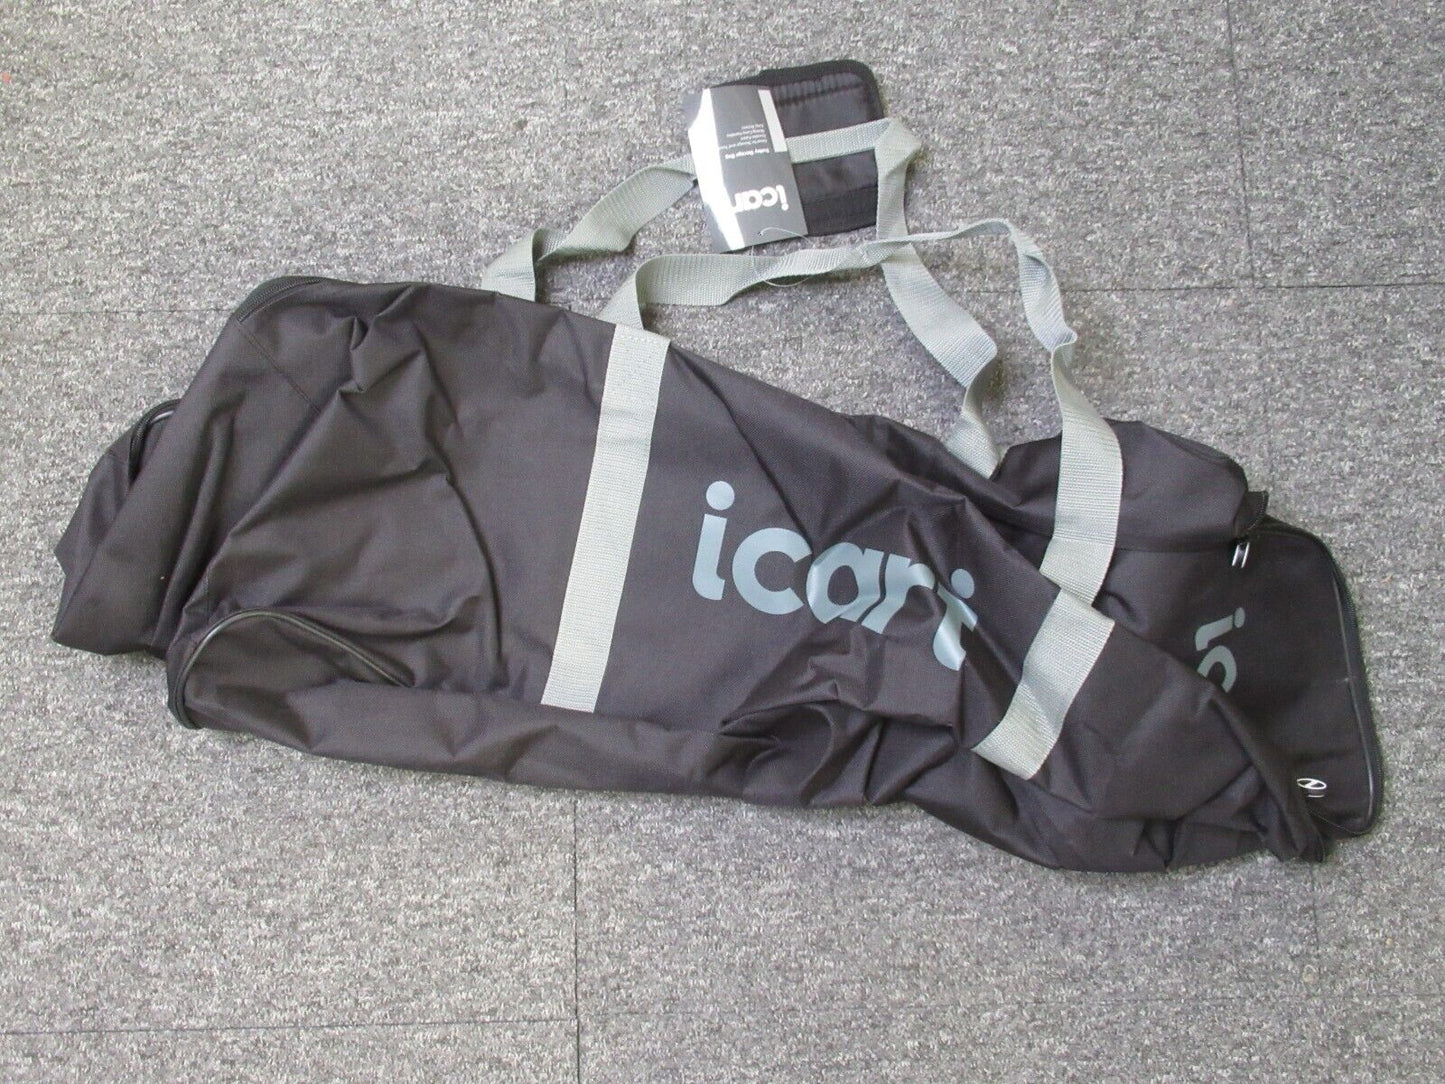 icart trolly storage bag